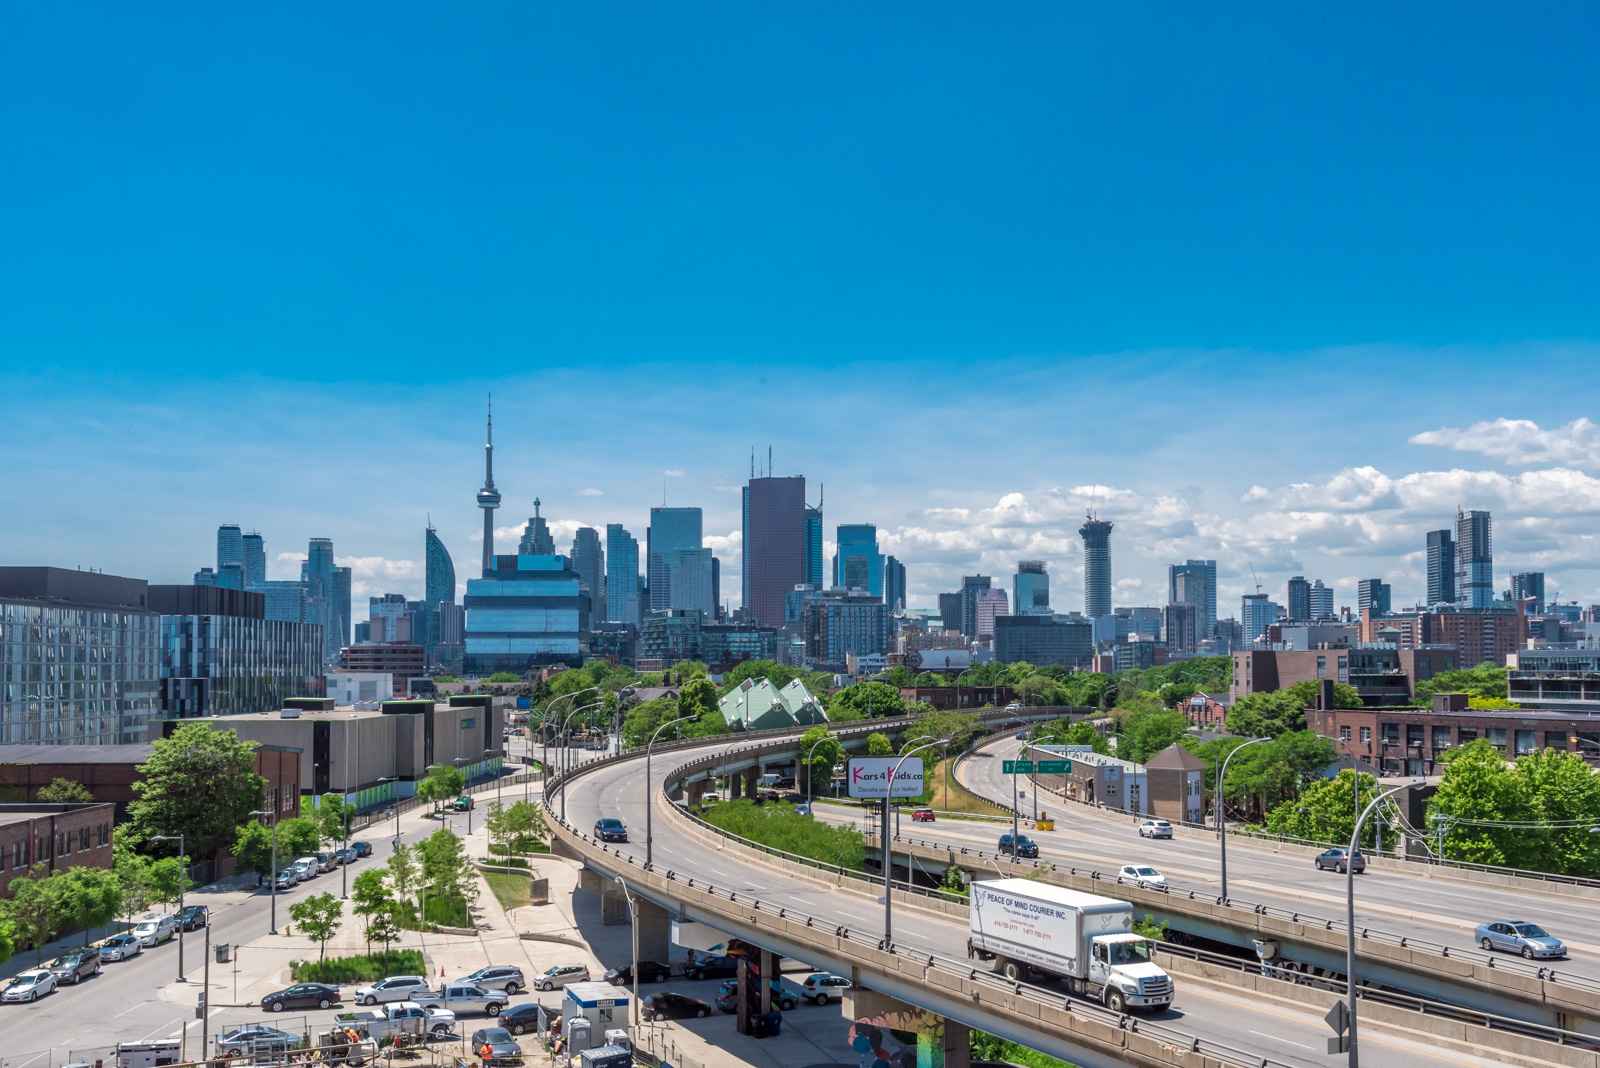 Finally, we have a photo of the Toronto skyline.